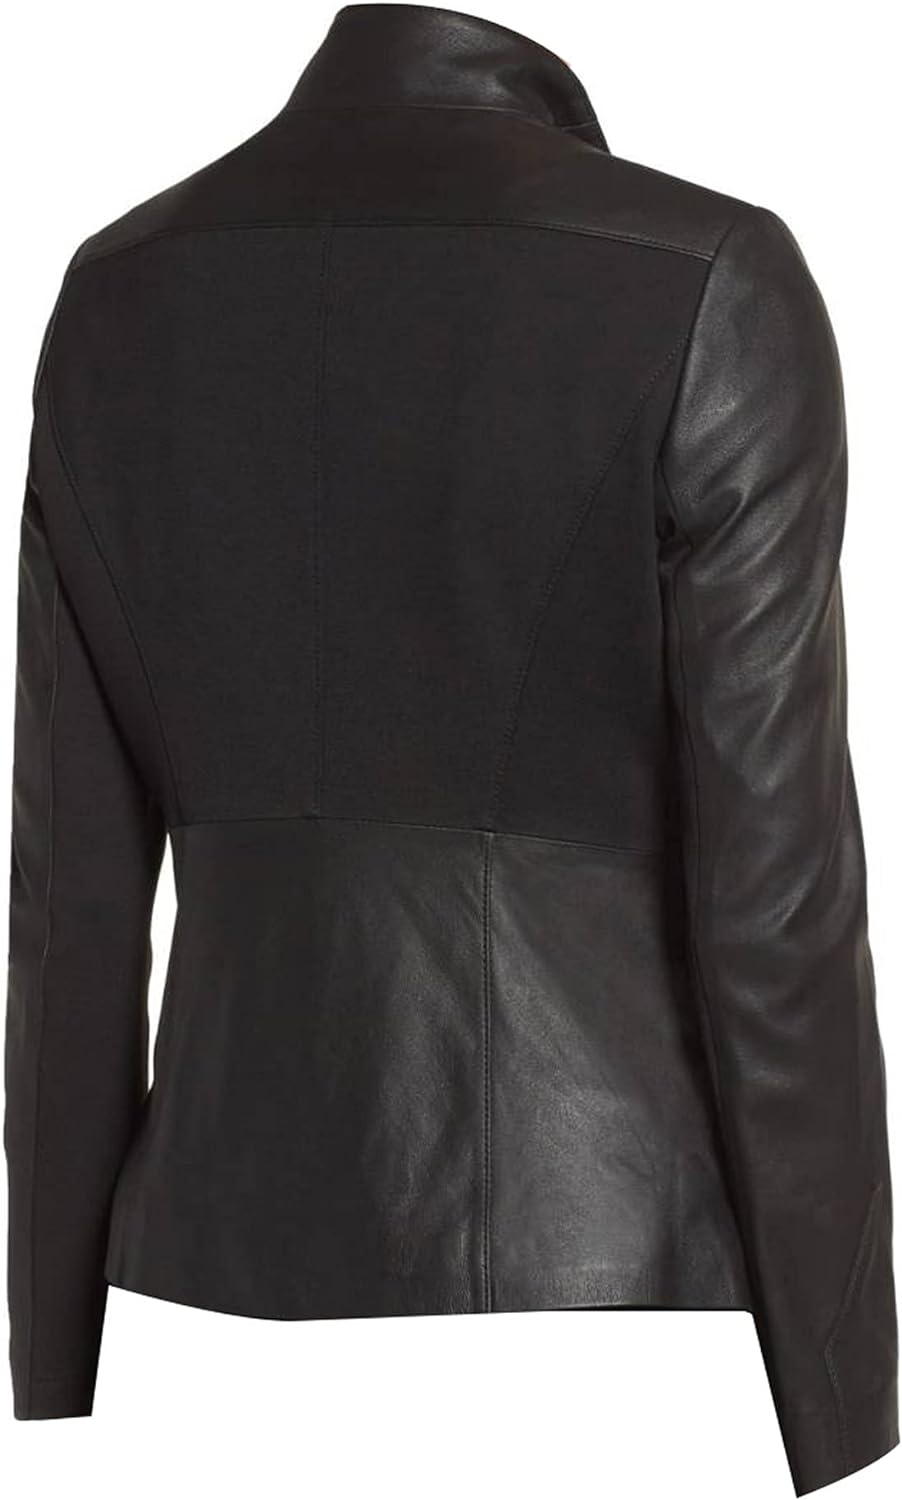 Ladies Black Real Lambskin Leather Fashion Jacket For Women